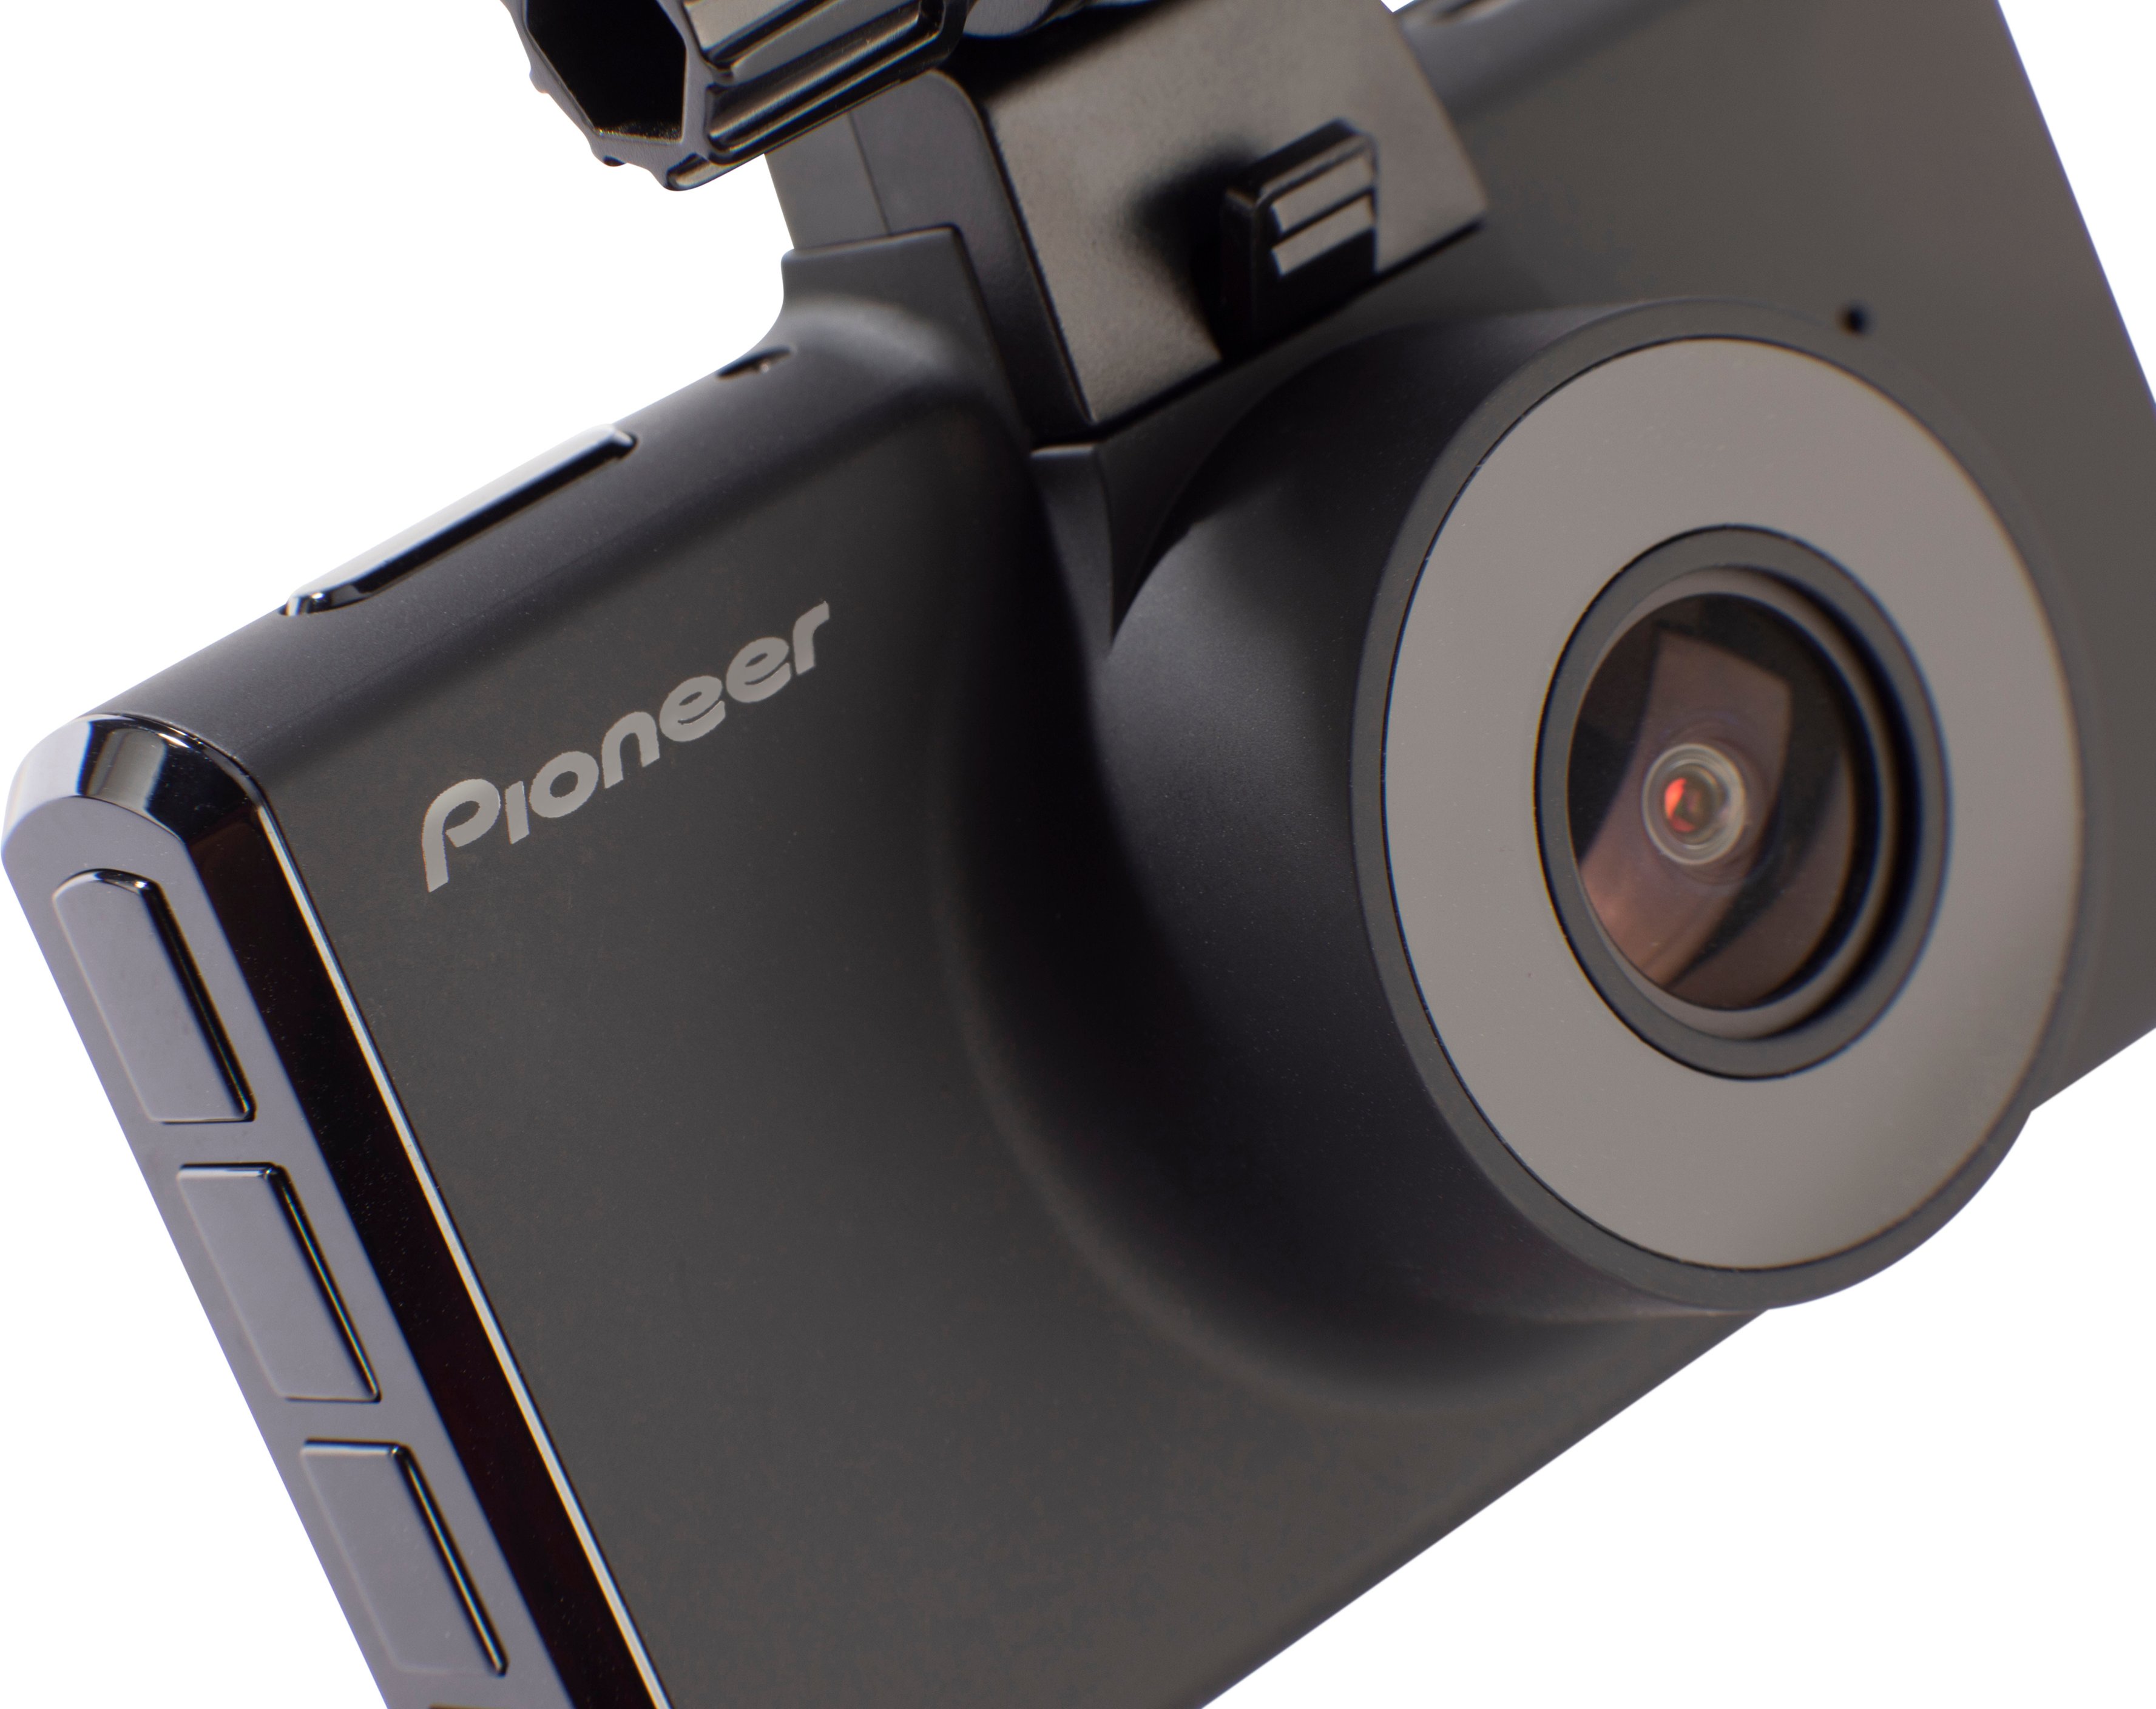 Pioneer VREC-DH300D at